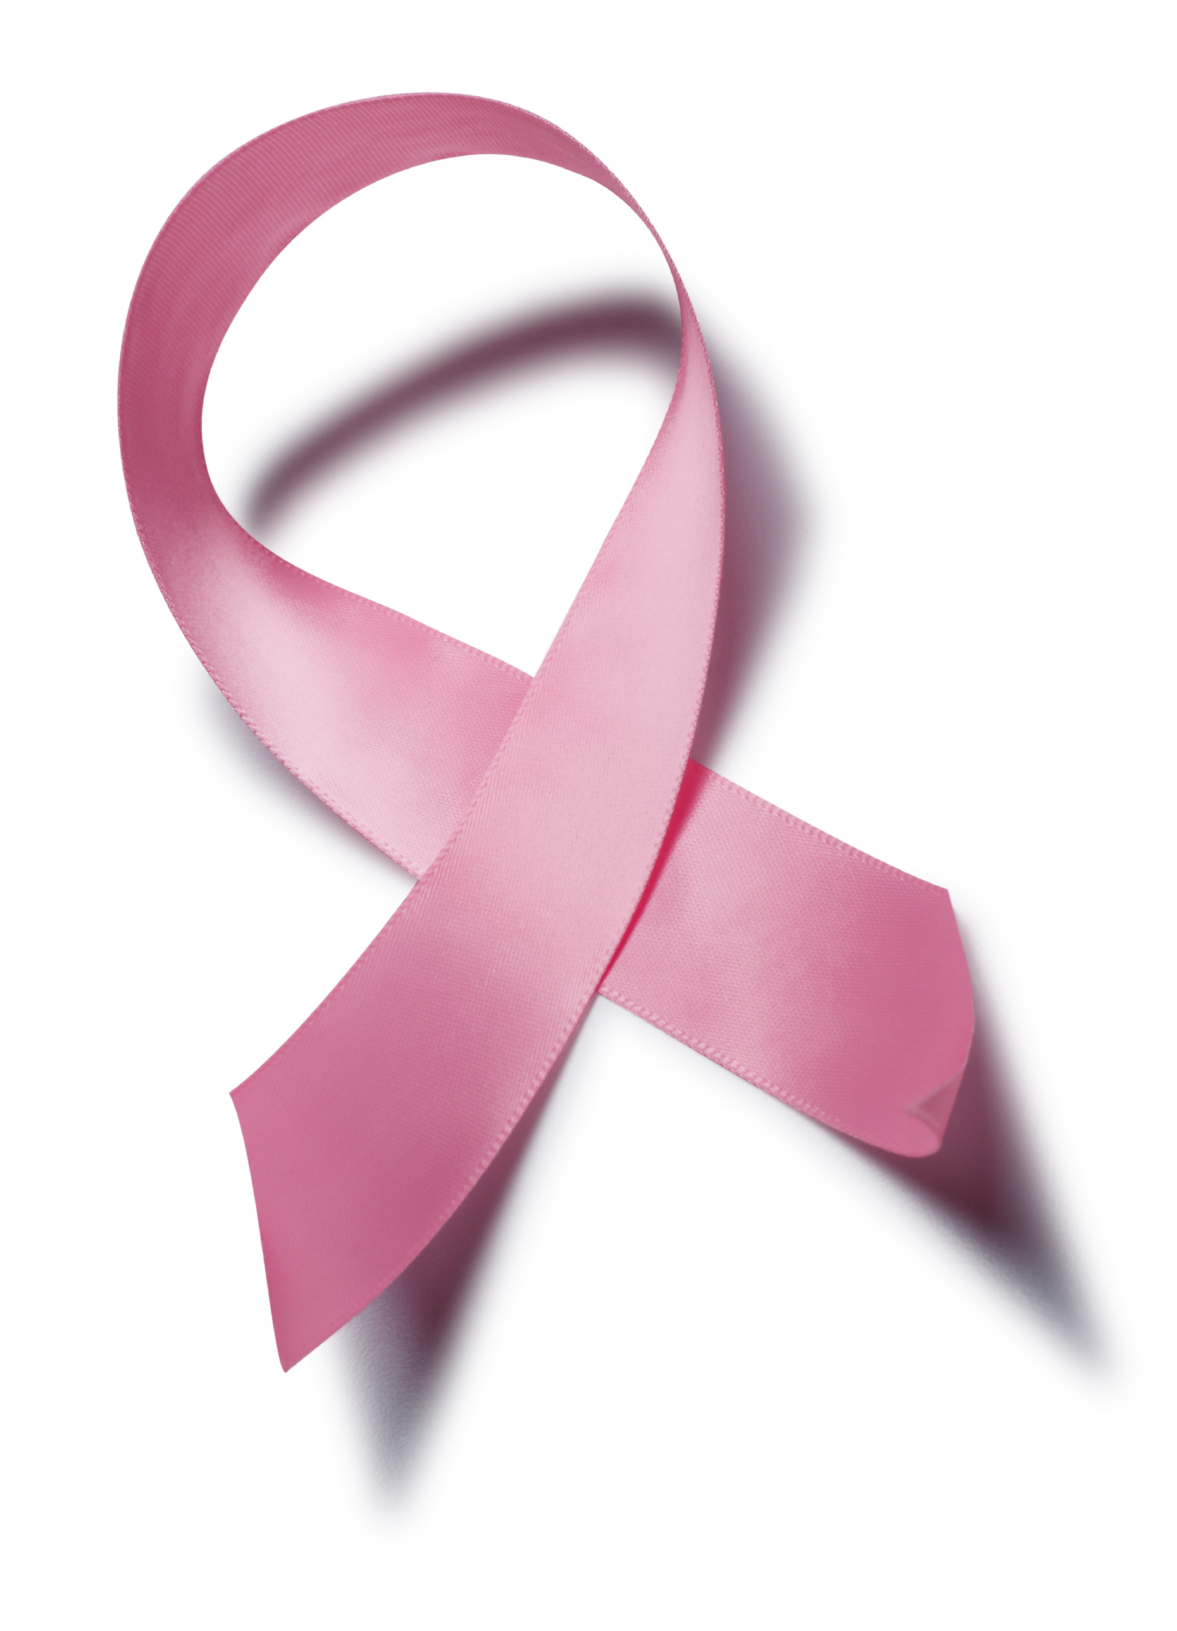 NTCC /uploads/2016/10/breast-cancer-ribbon1_original.jpg